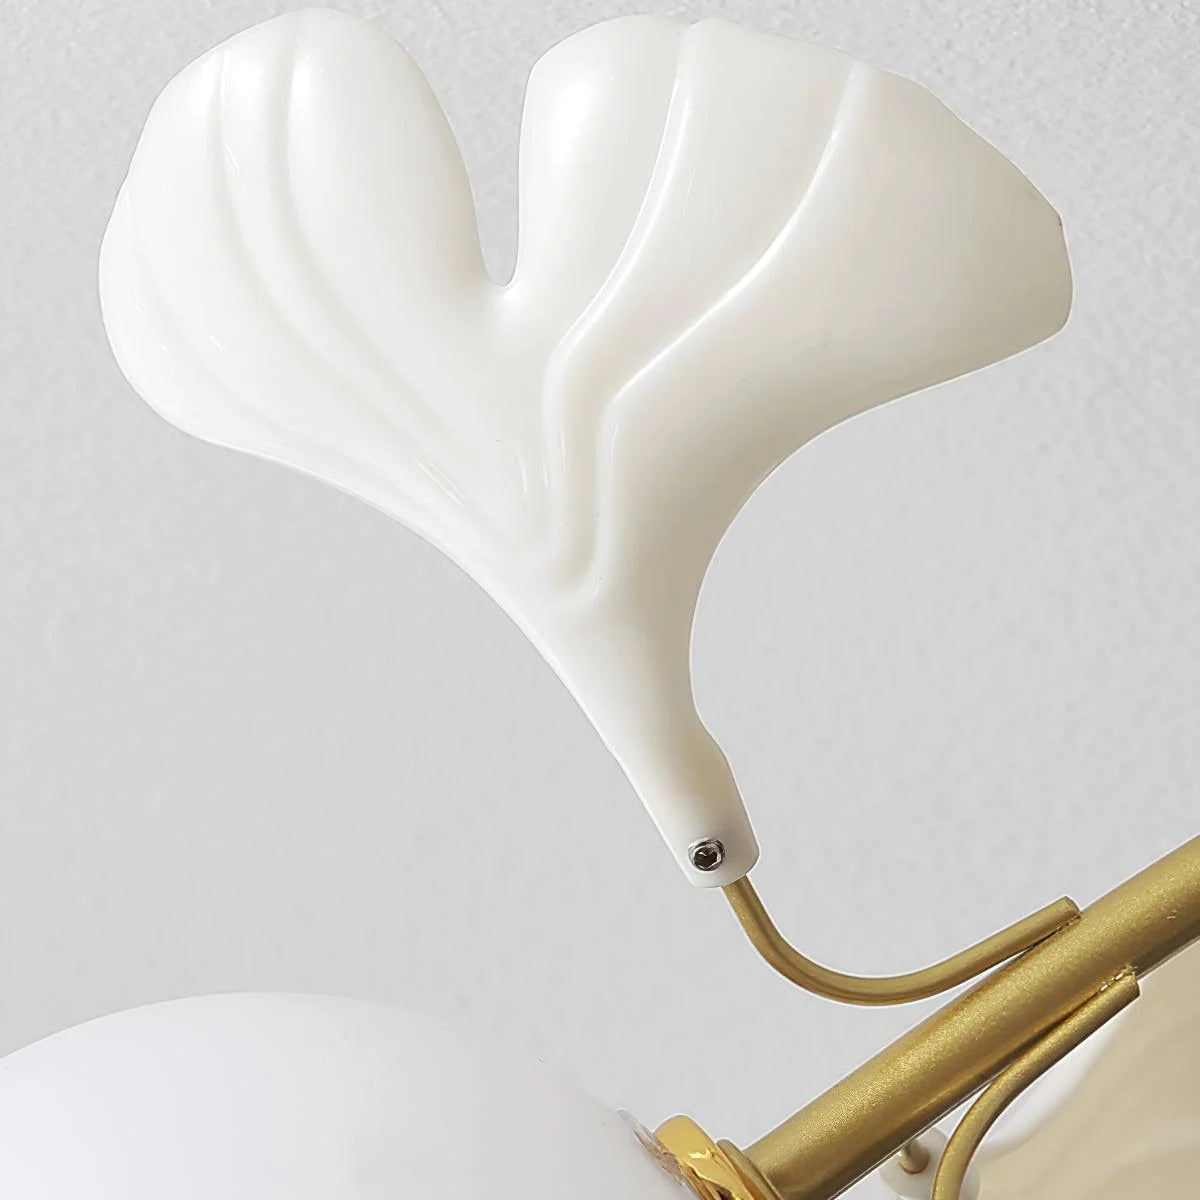 Olivia Nordic Multi Globe Metal/Ceramic Flush Mount Ceiling Light, White/Gold